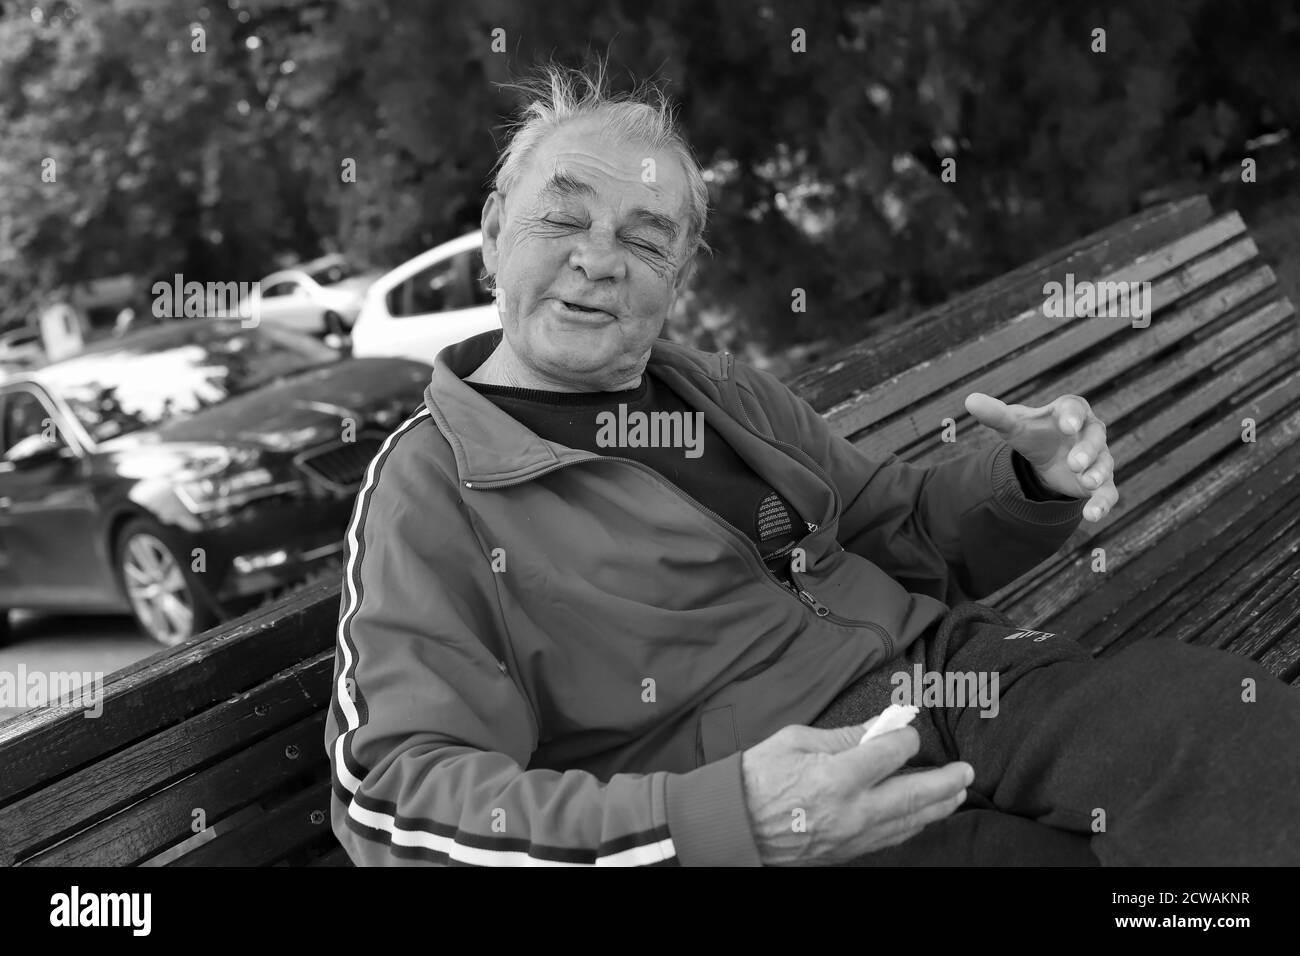 Belgrade, Serbia, Jun 18, 2020: Portrait of a drunk man sitting on a bench (B/W) Stock Photo